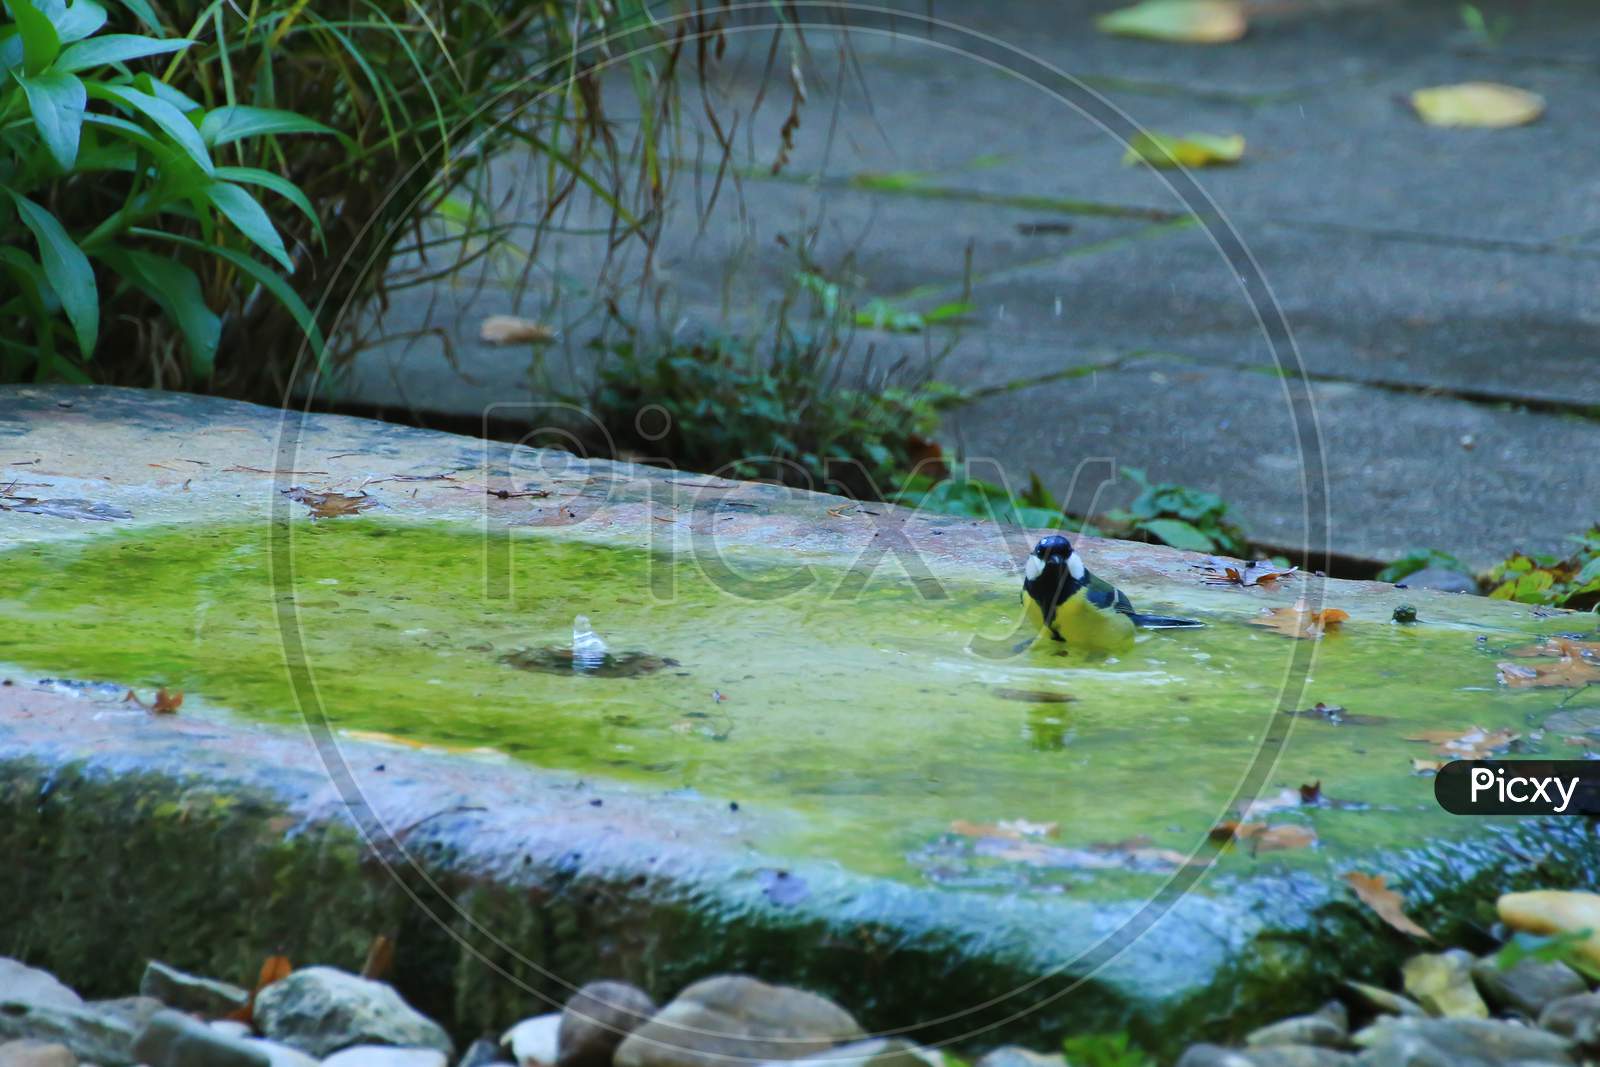 A Robin Having A Bath In A Public Pool In The Park